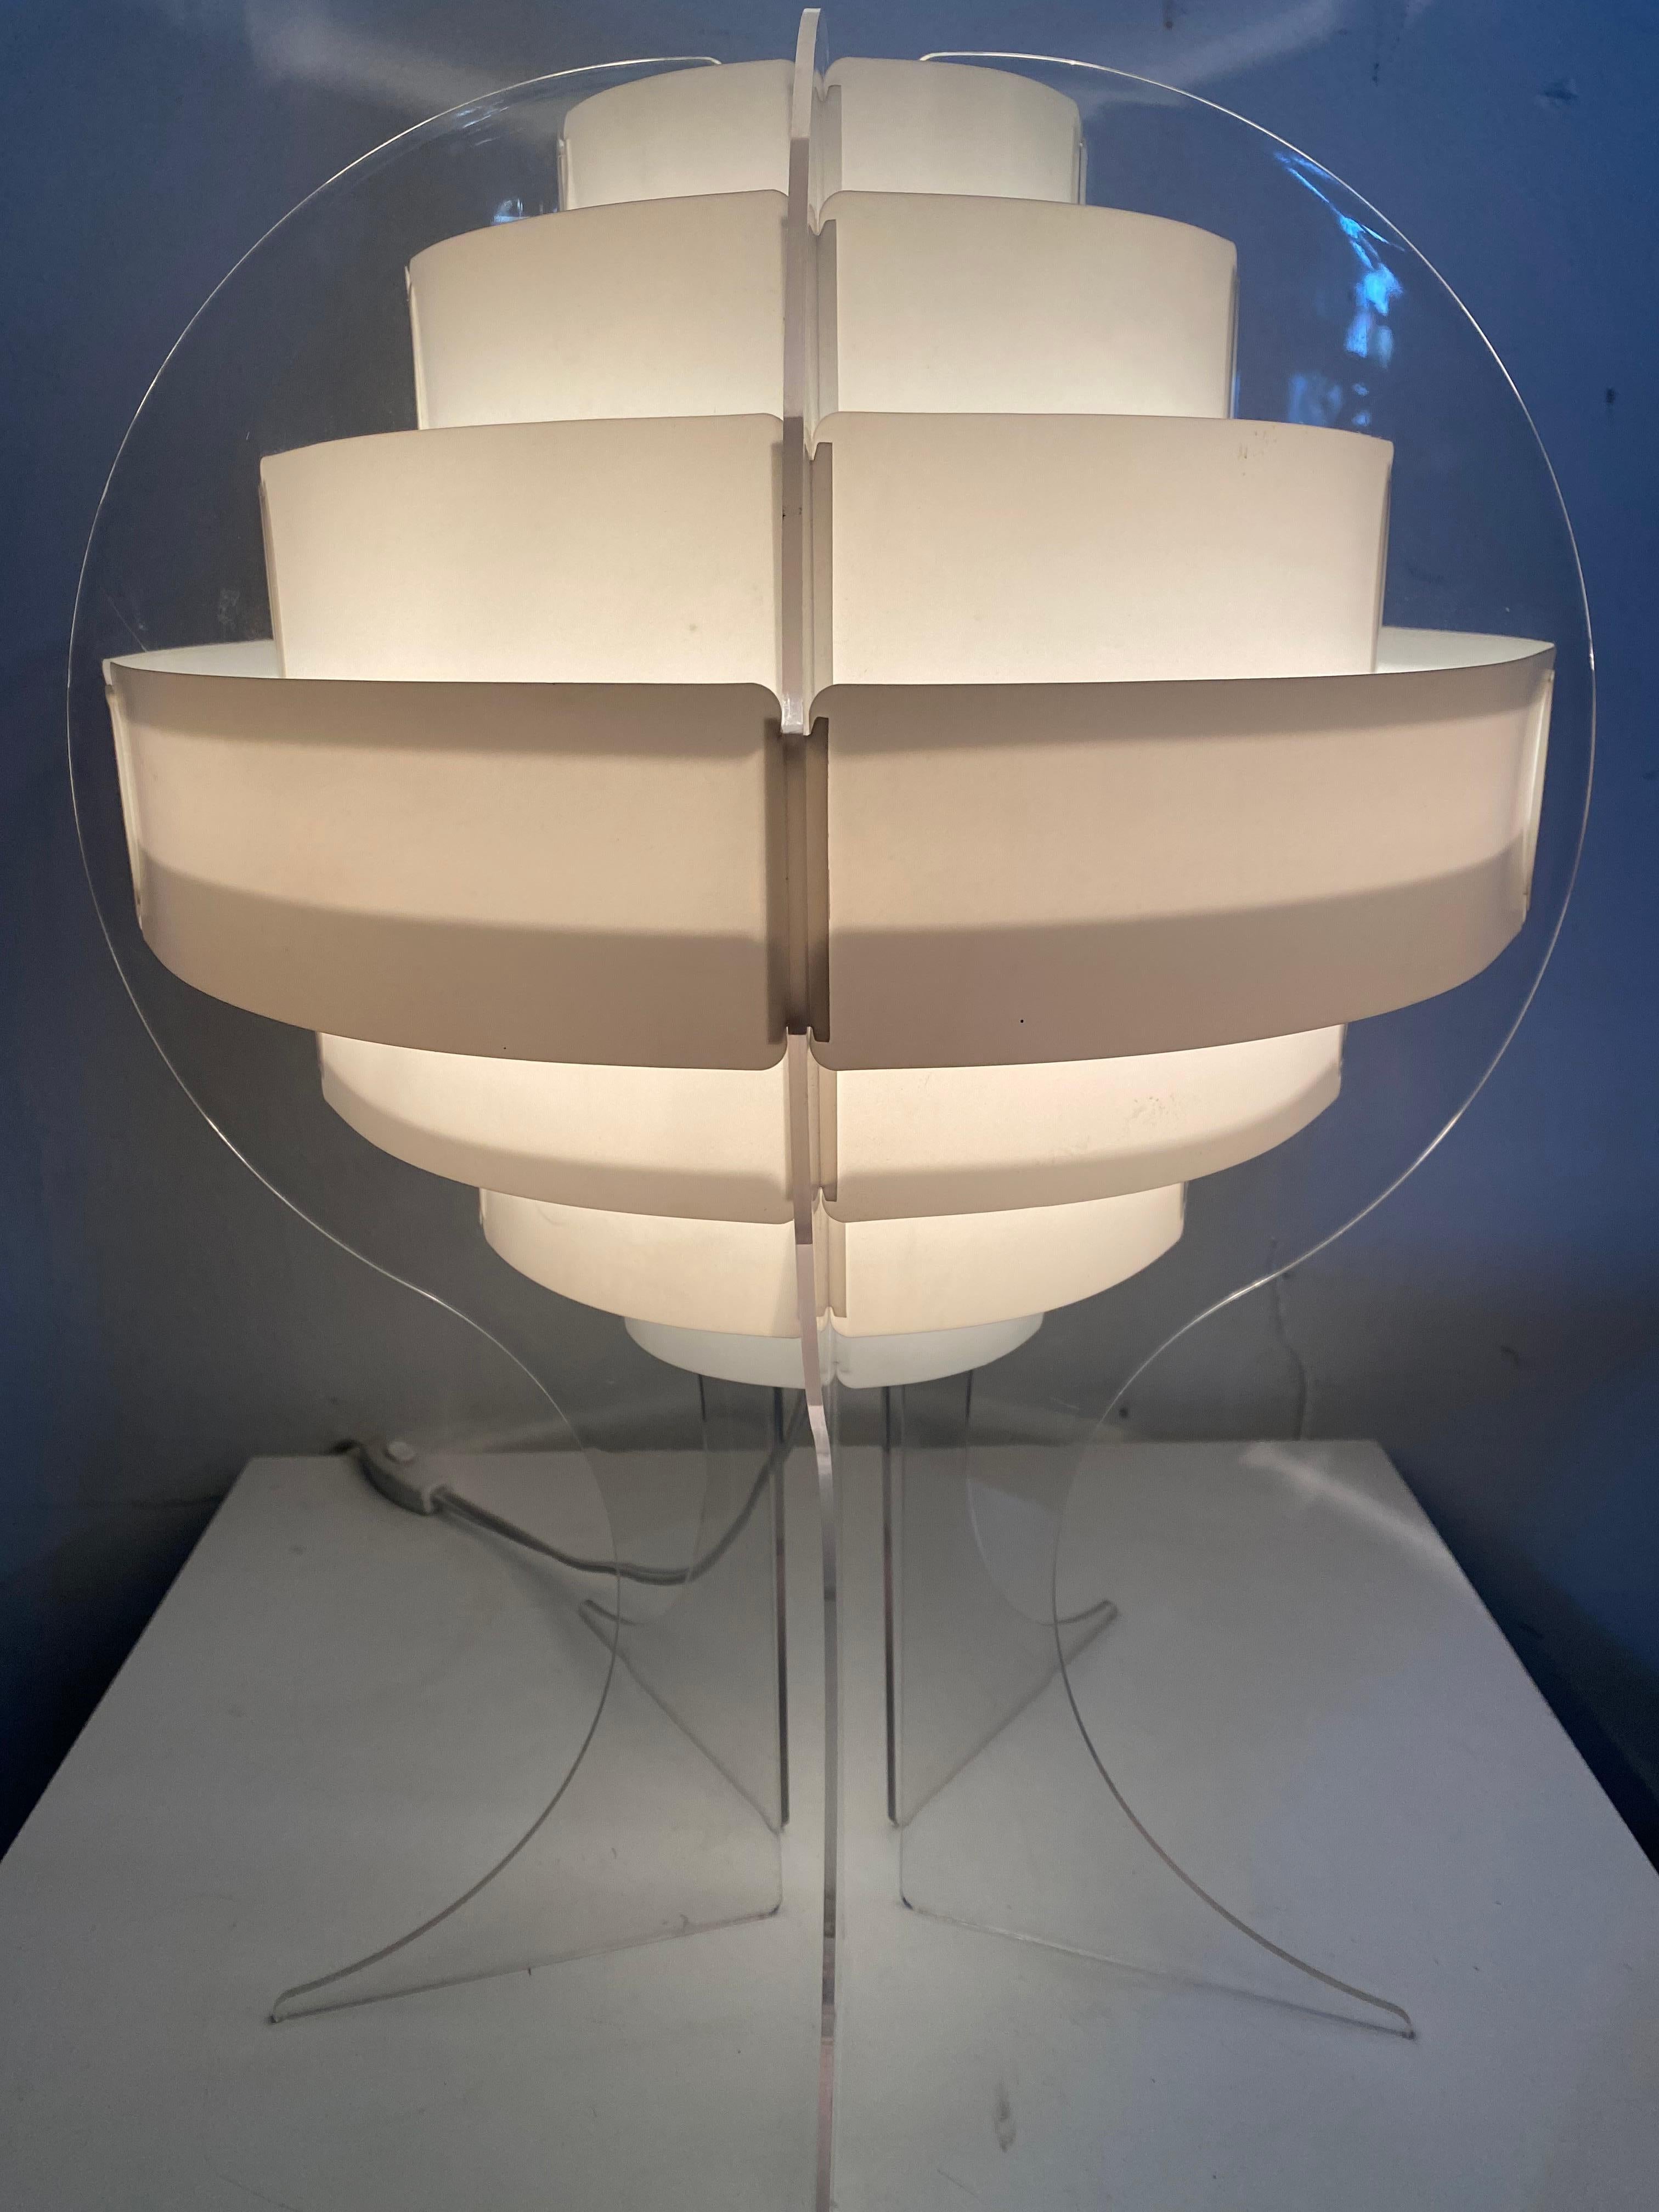 Classic Danish Pop 1960s /Space Age Flemming Brylle & Preben Jacobsen table lamp, 1960s fabulous, plastic, screens with white plastic slats. Lucite, acrylic frame.